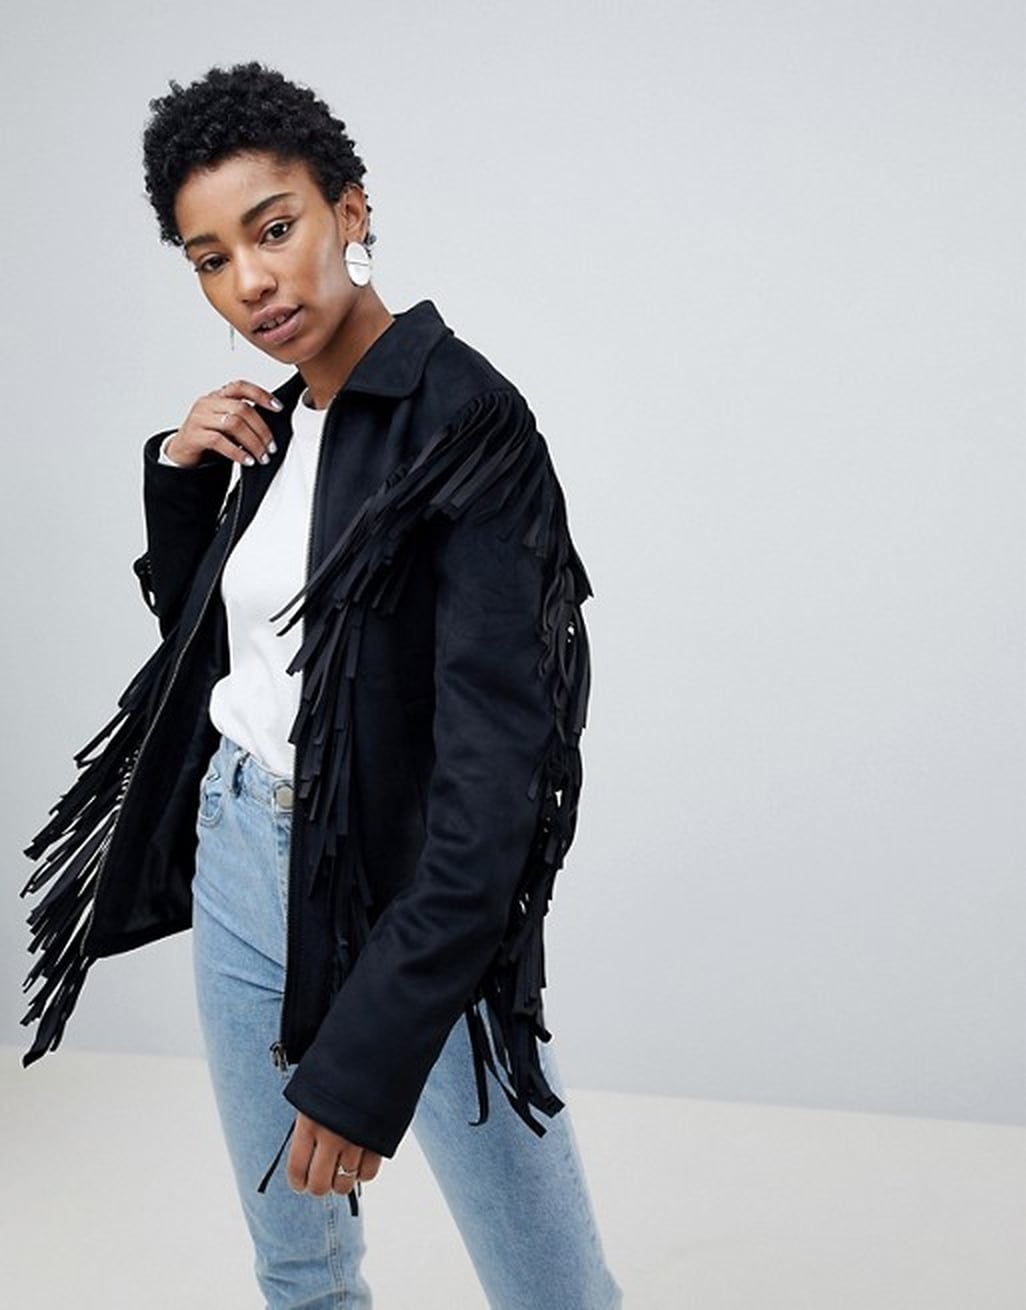 How to Wear a Fringe Jacket For Women 2019 | POPSUGAR Fashion